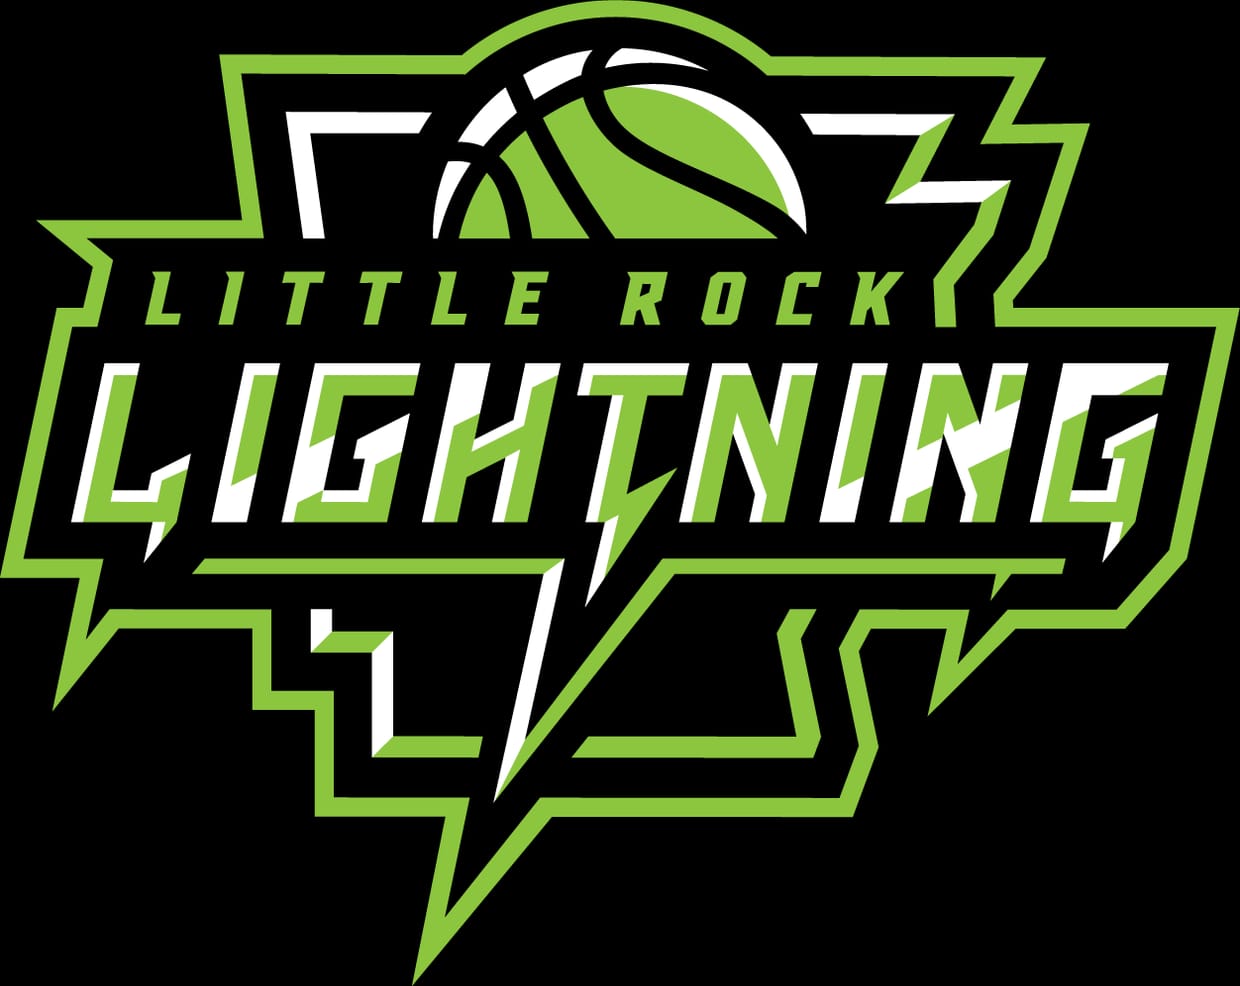 Little Rock Lightning Home Game 